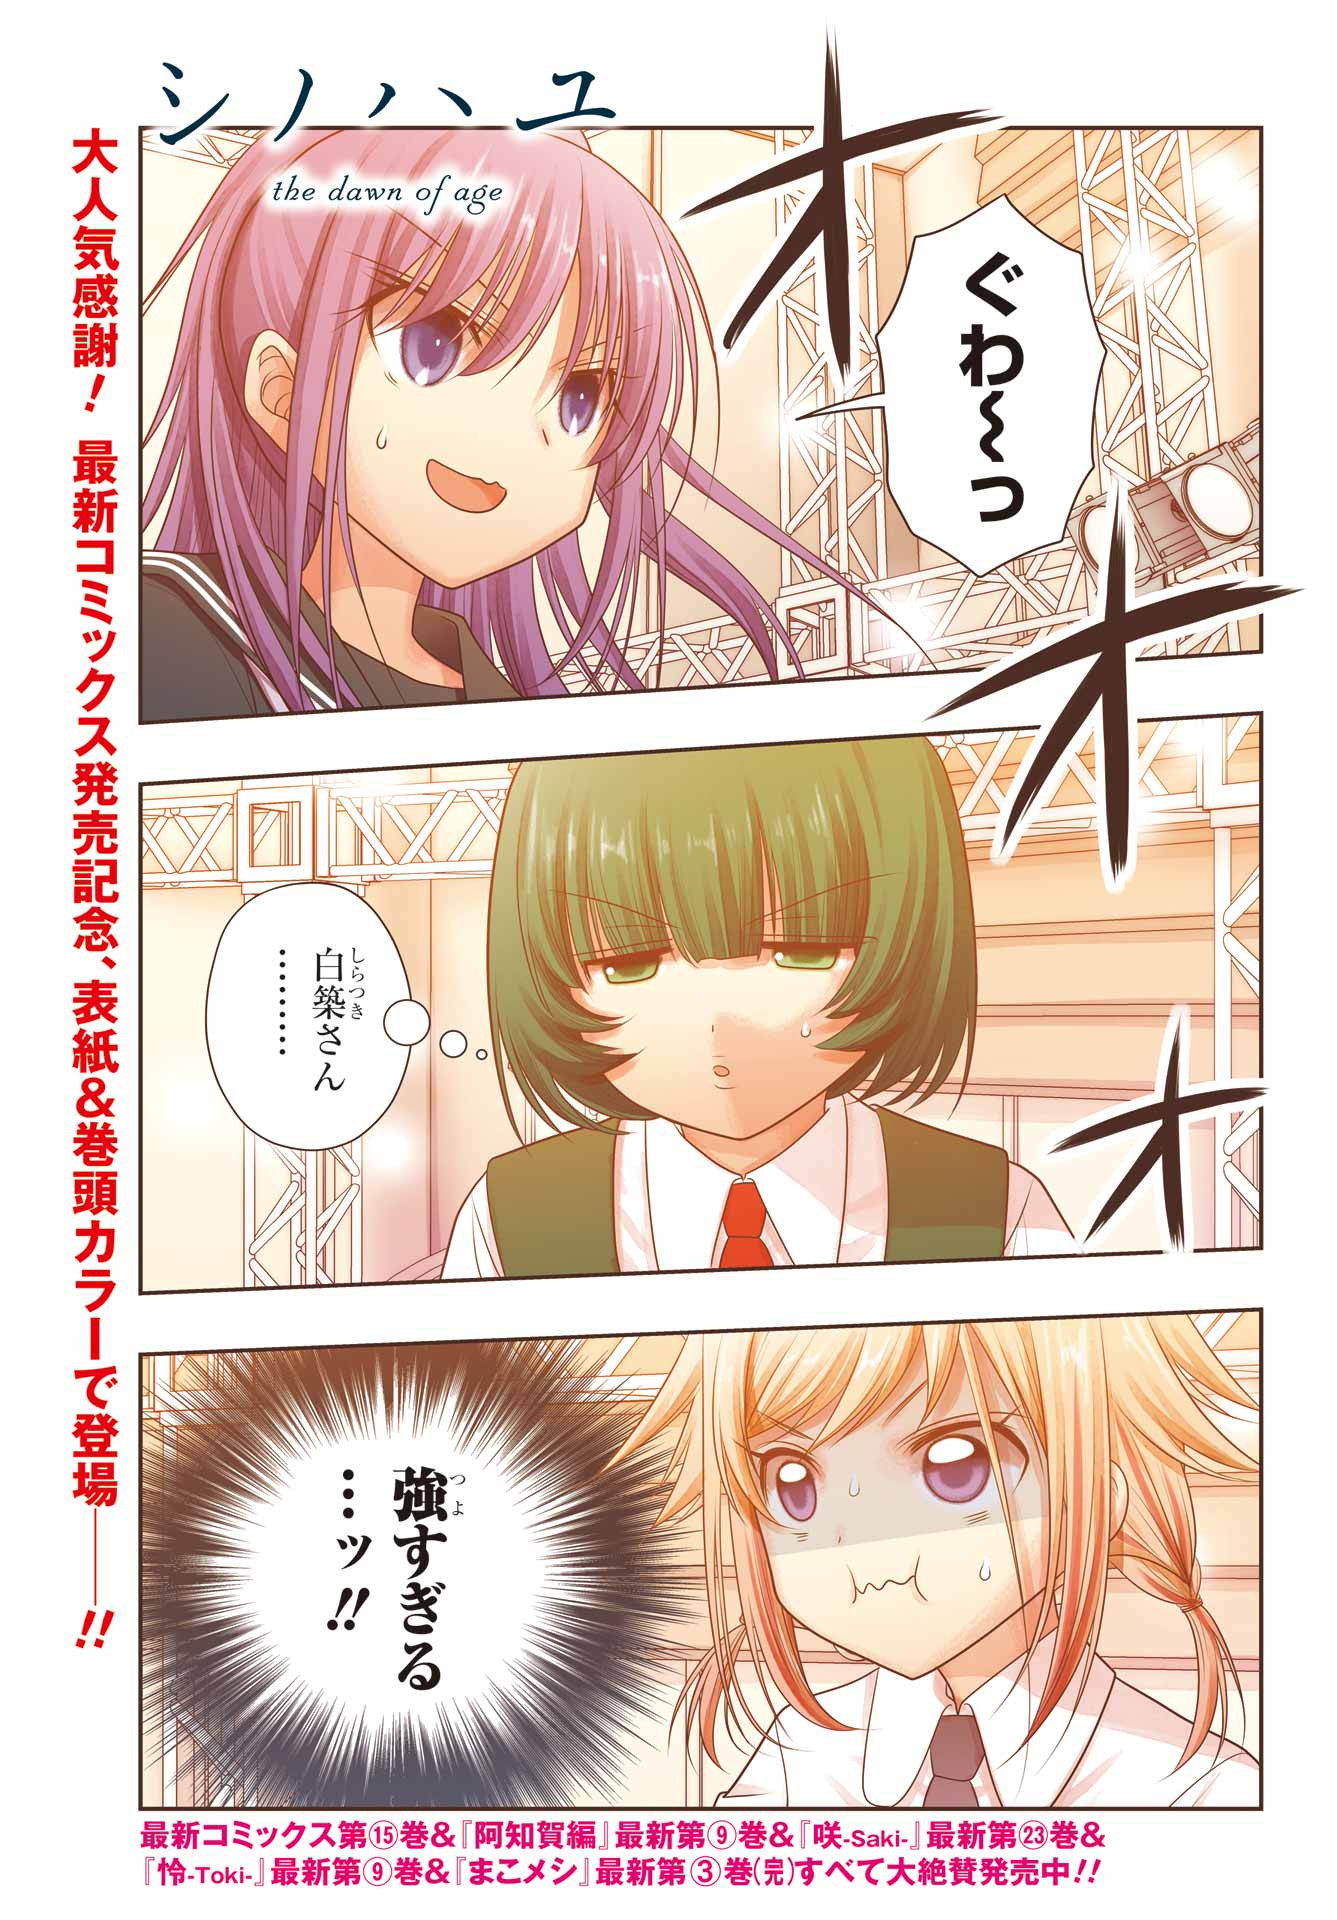 Shinohayu - The Dawn of Age Manga - Chapter 098 - Page 2